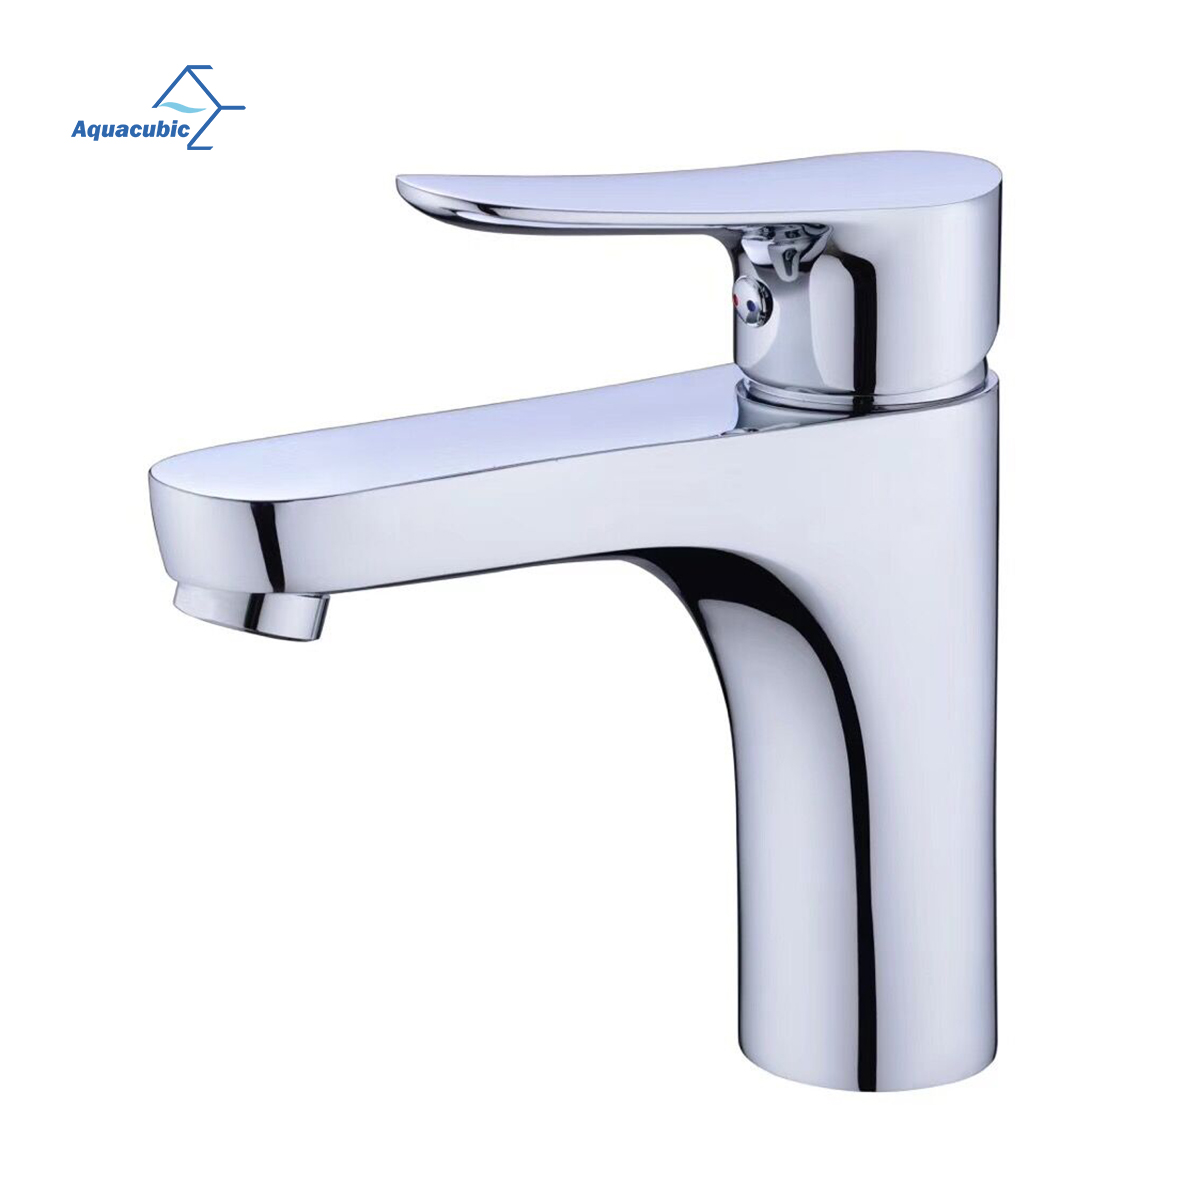 Aquacubic cUPC Single Handle Brushed Nickel Wash Basin Tap Lavatory Washroom Bathroom Sink Faucet